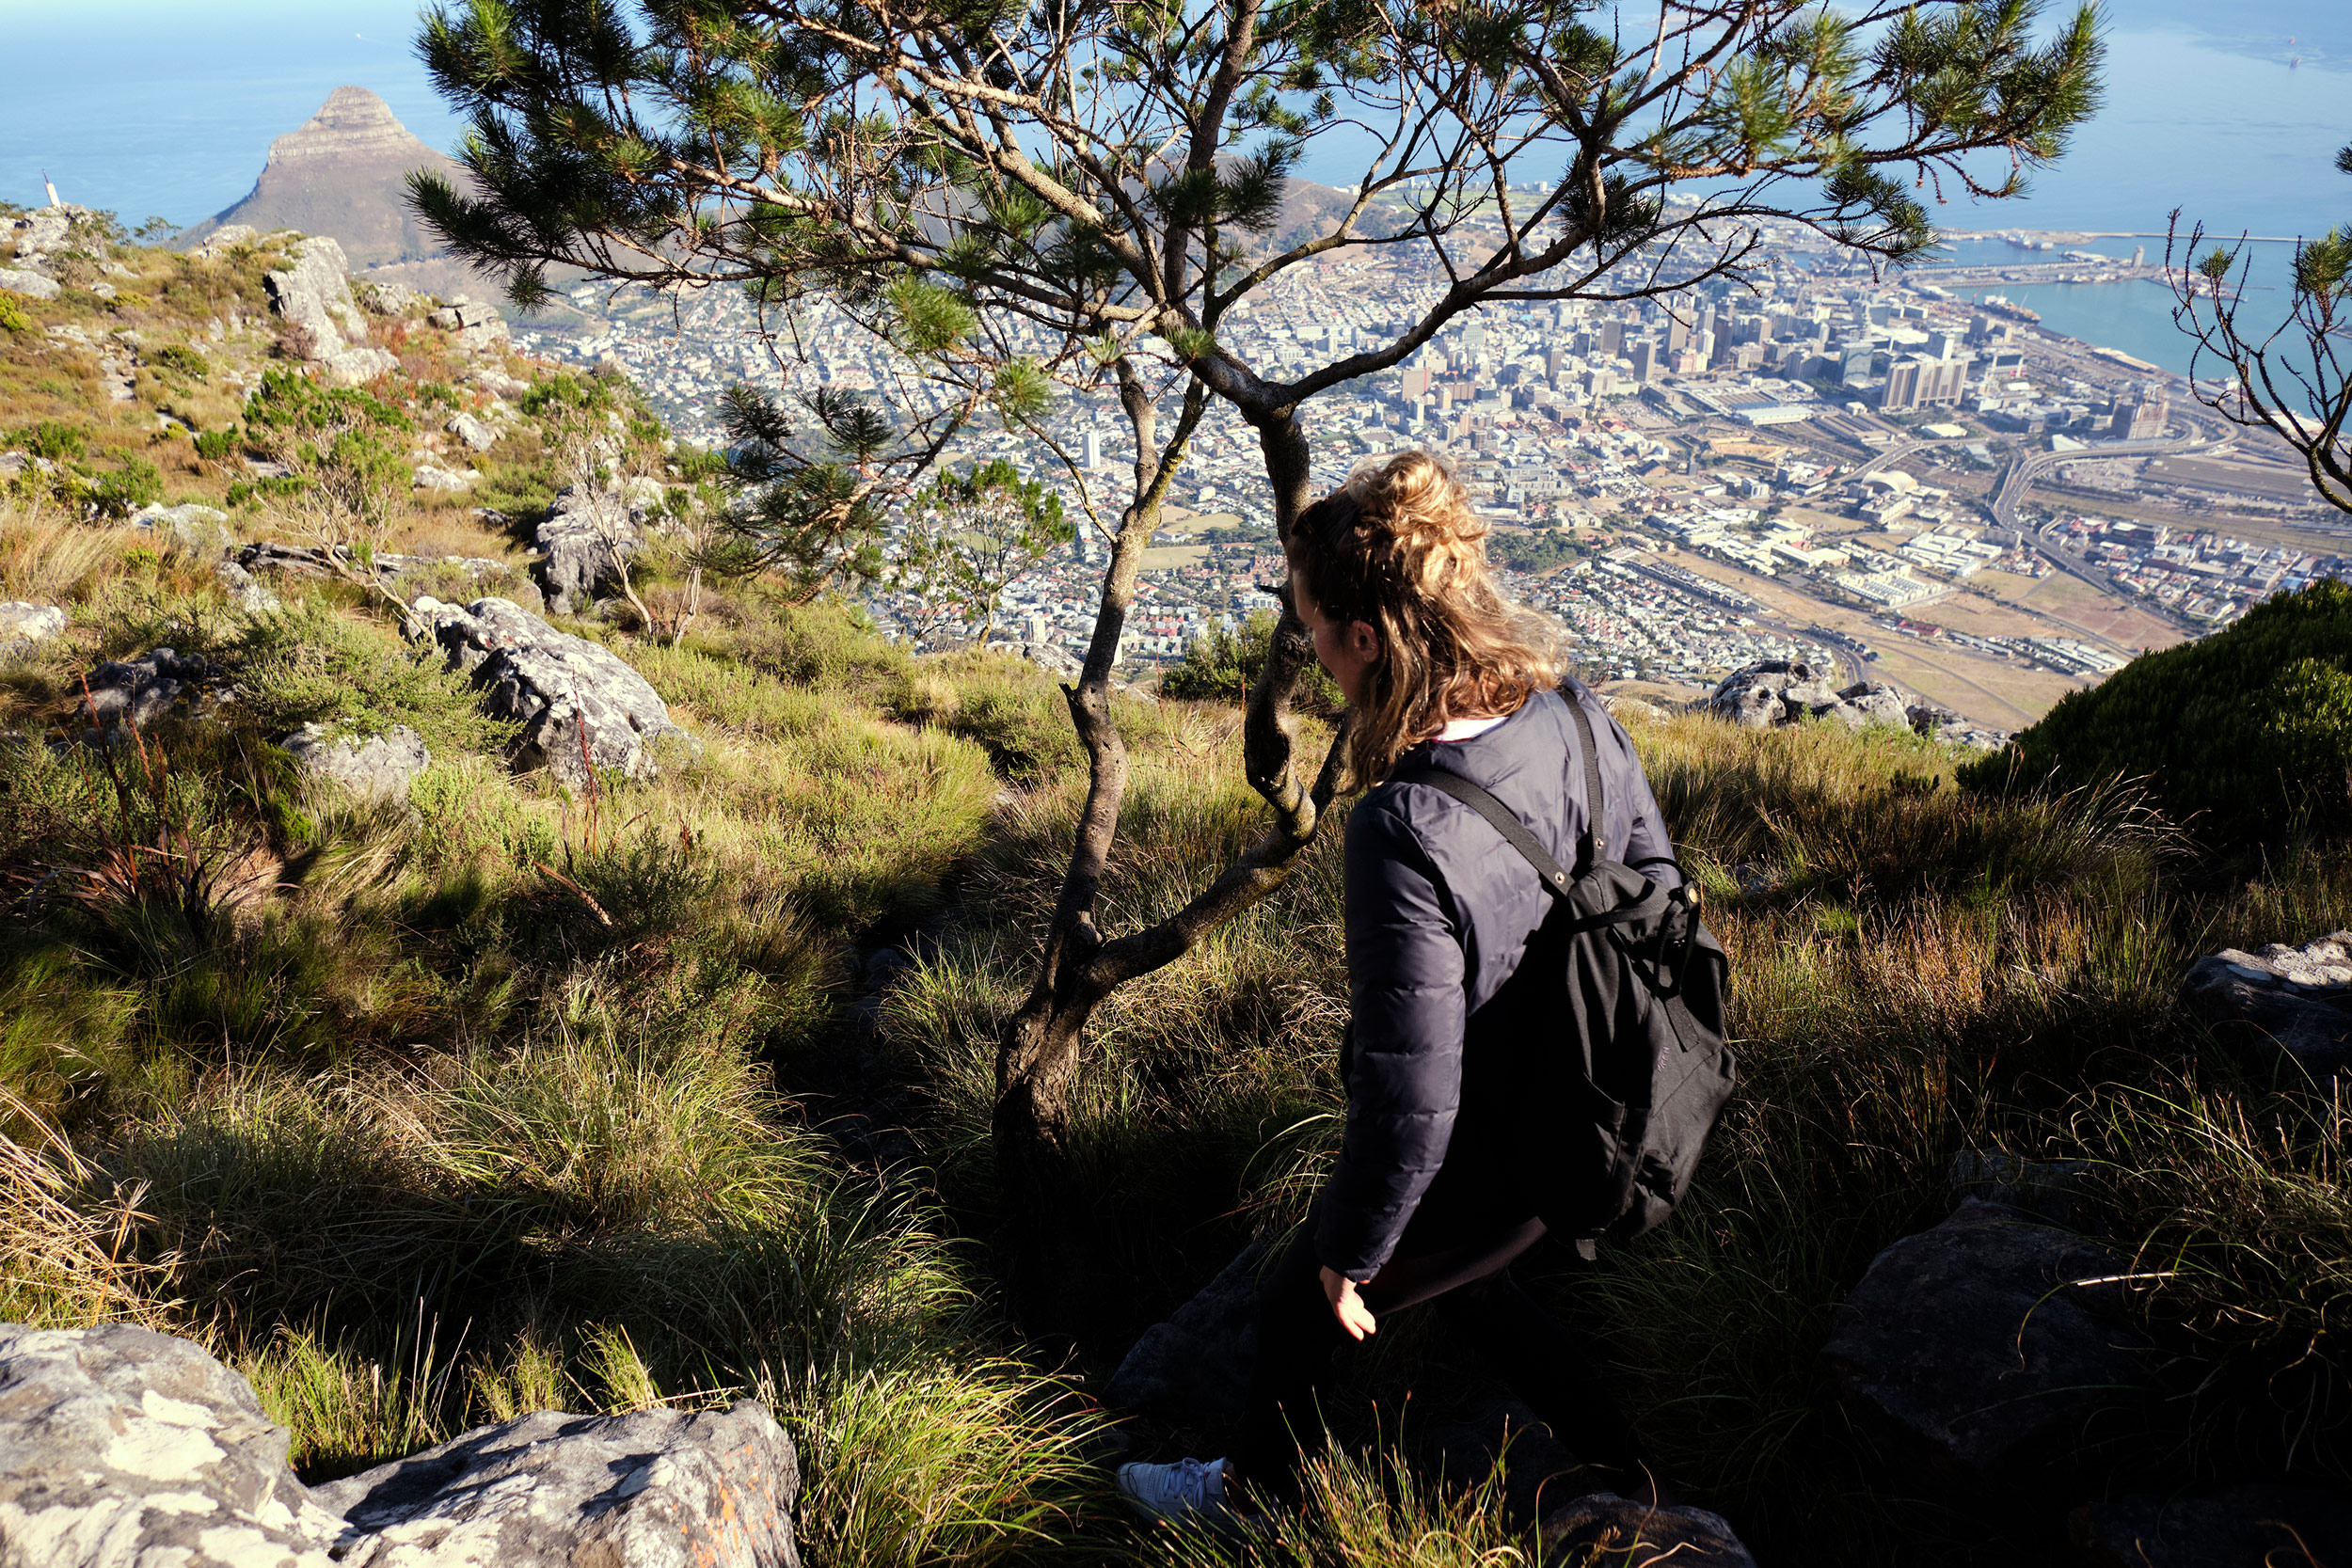 Devils Peak Cape Town Tafelberg Hiking South Africa